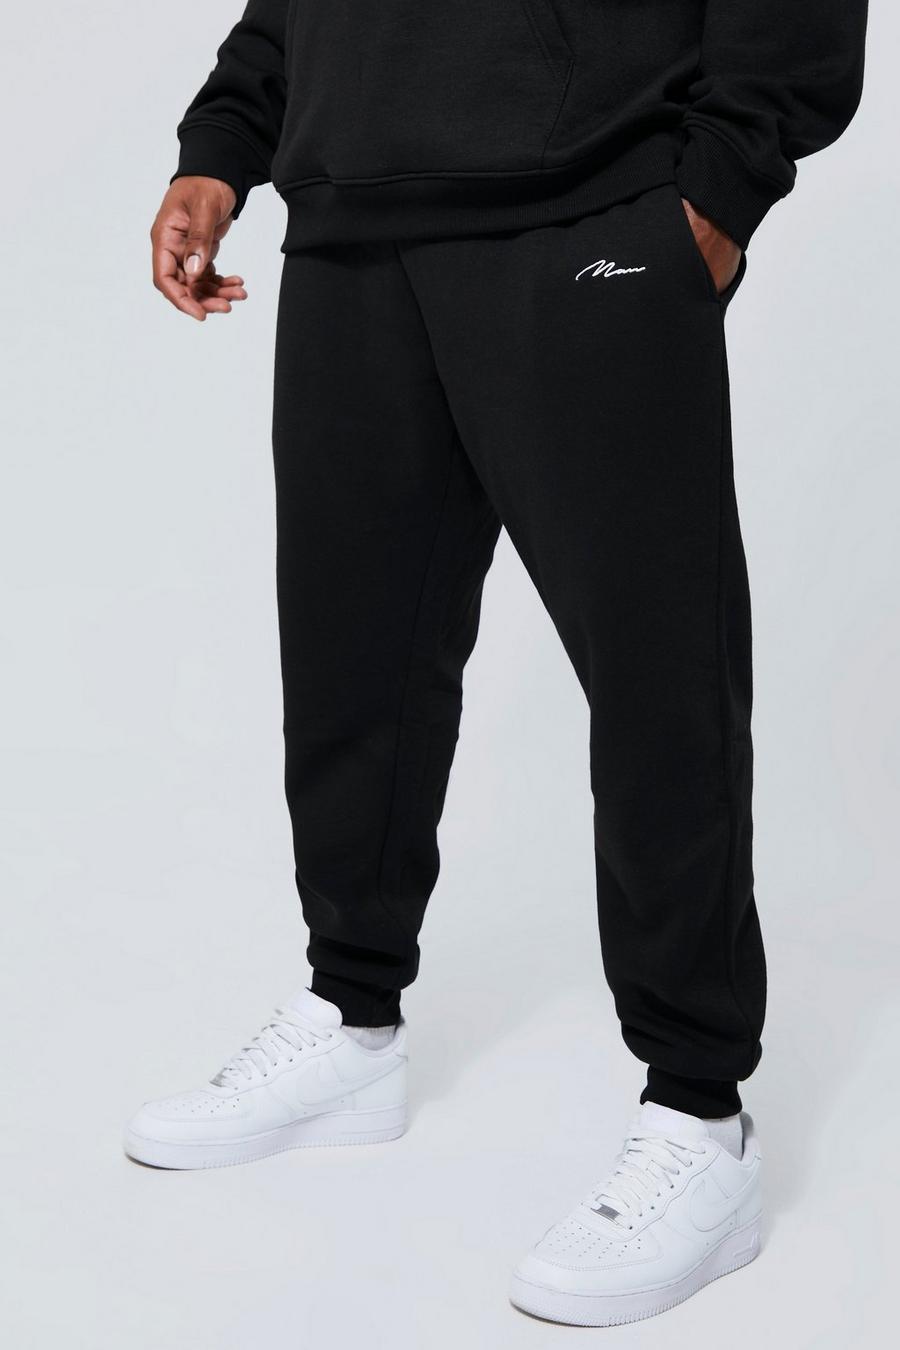 Pantaloni tuta Plus Size Basic Skinny Fit con scritta Man, Black nero